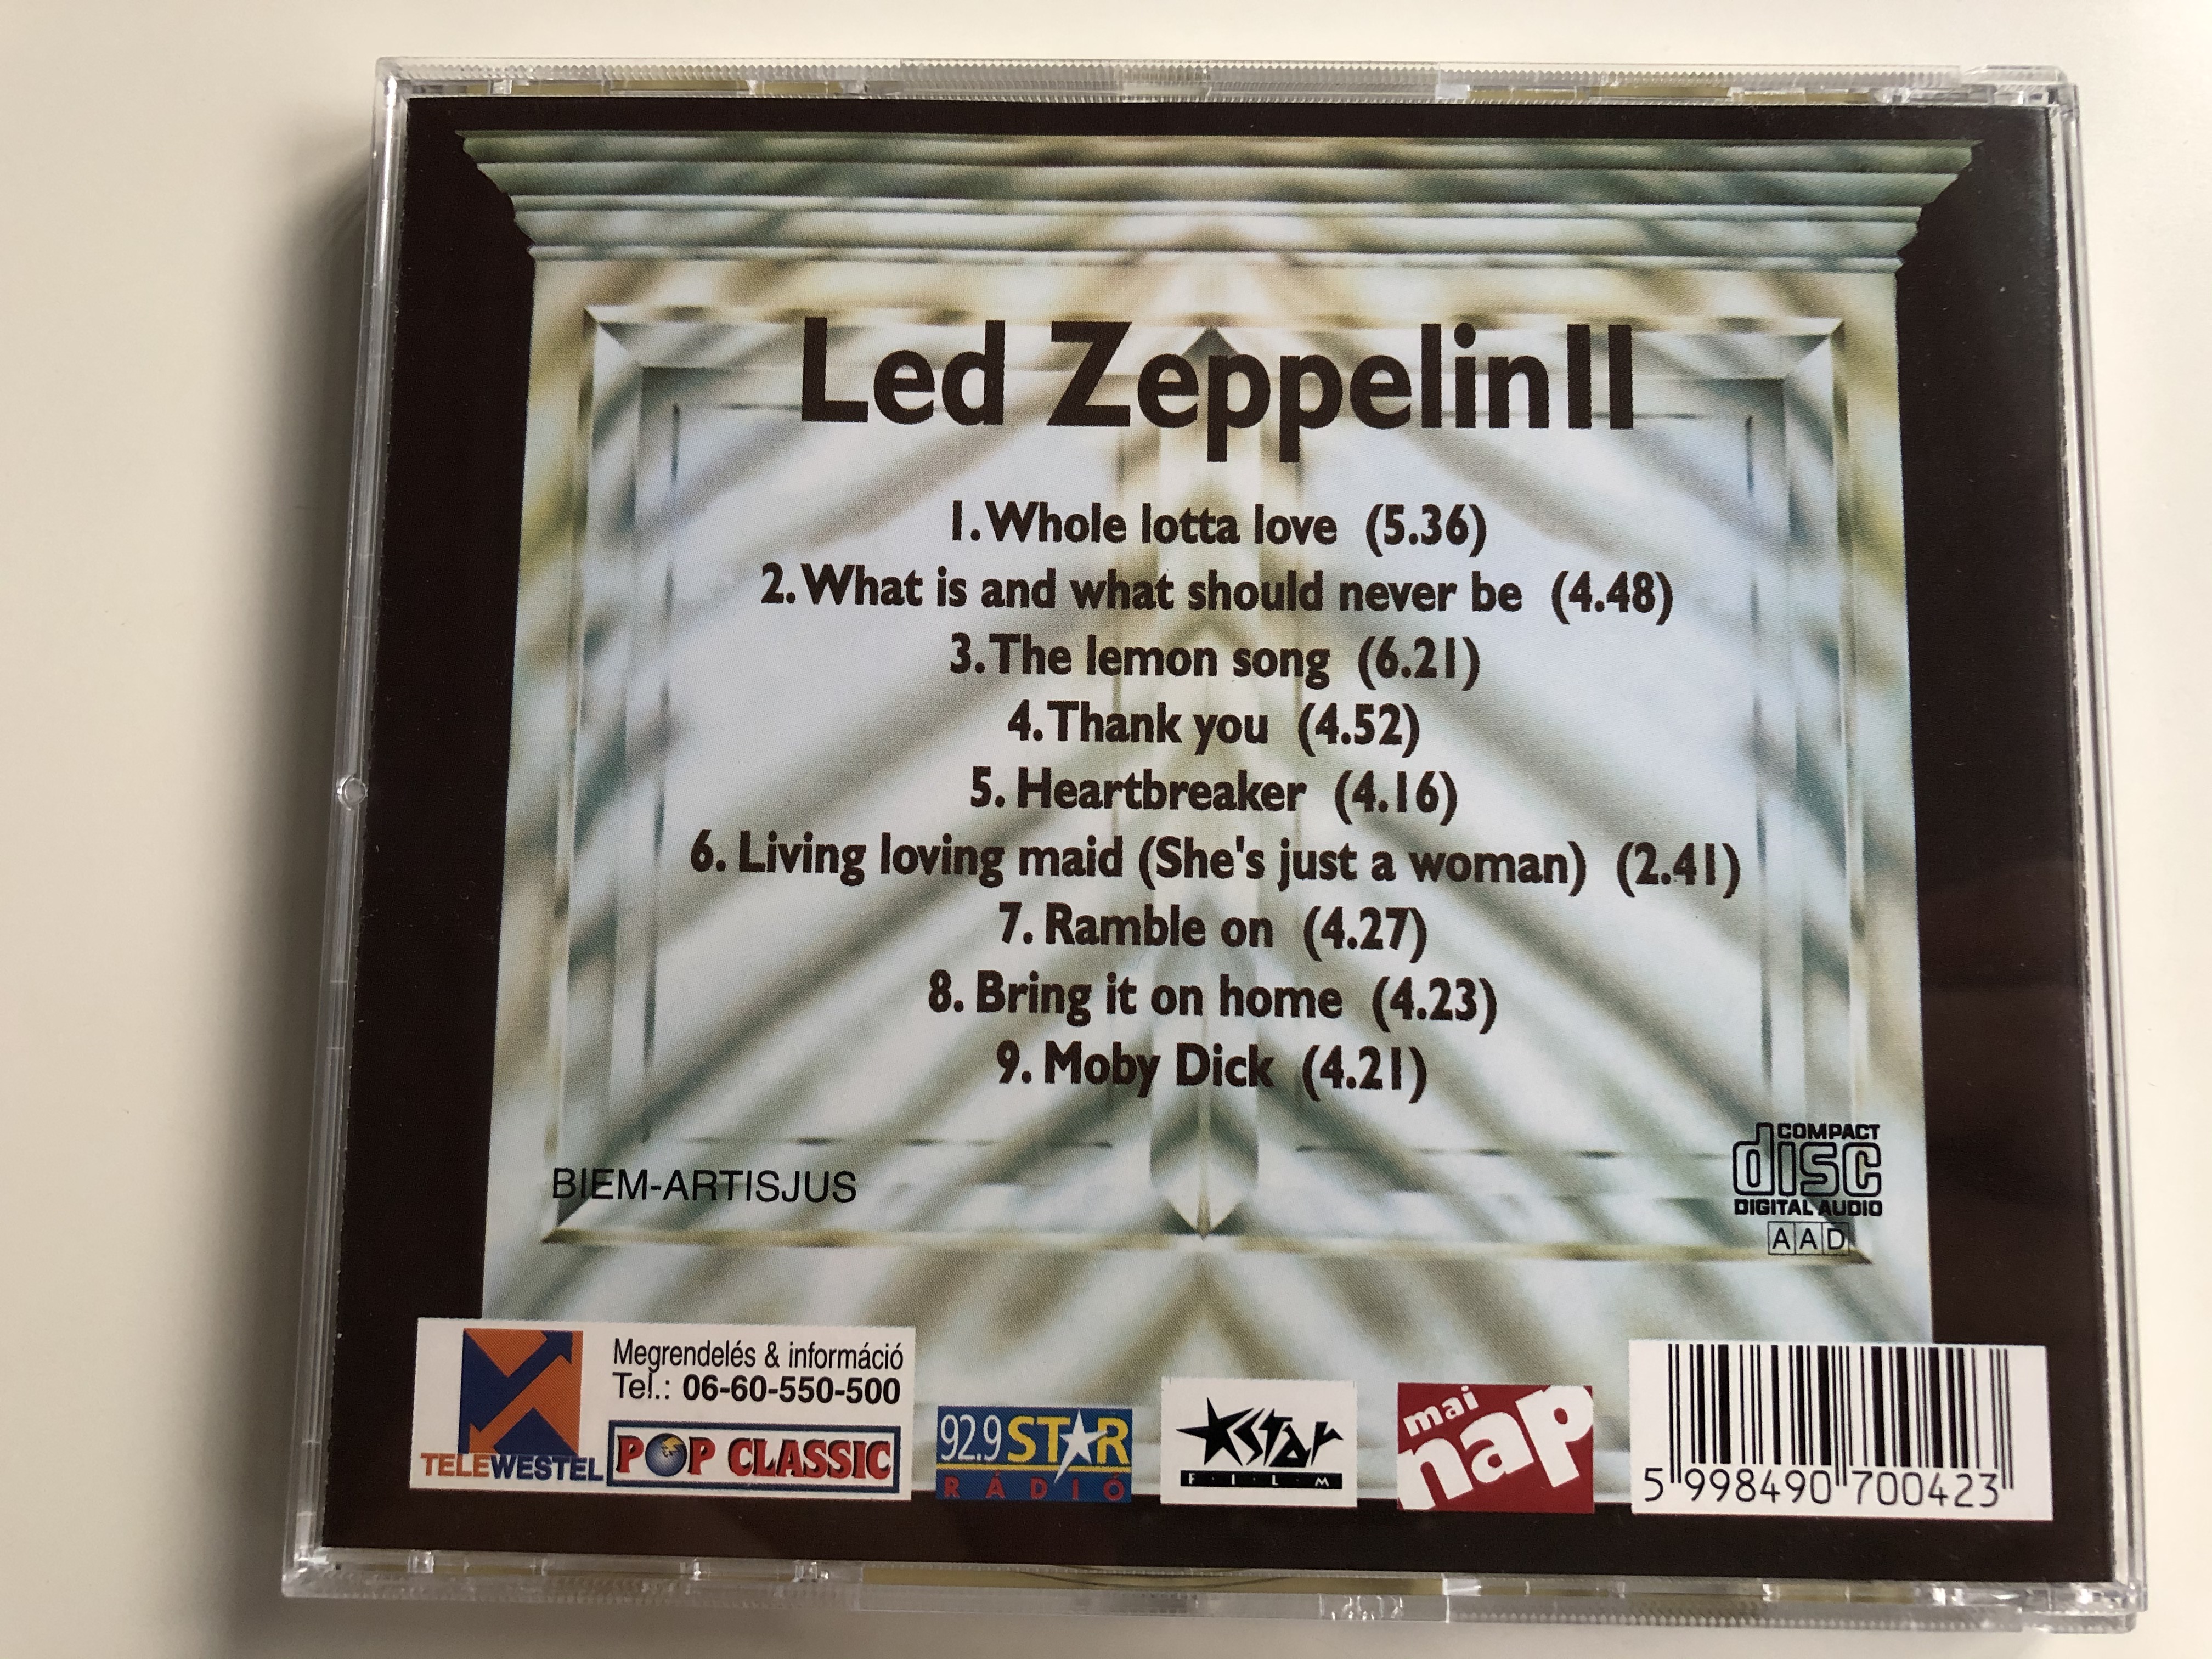 Led Zeppelin II / Pop Classic / Euroton ‎Audio CD / EUCD-0042 -  bibleinmylanguage